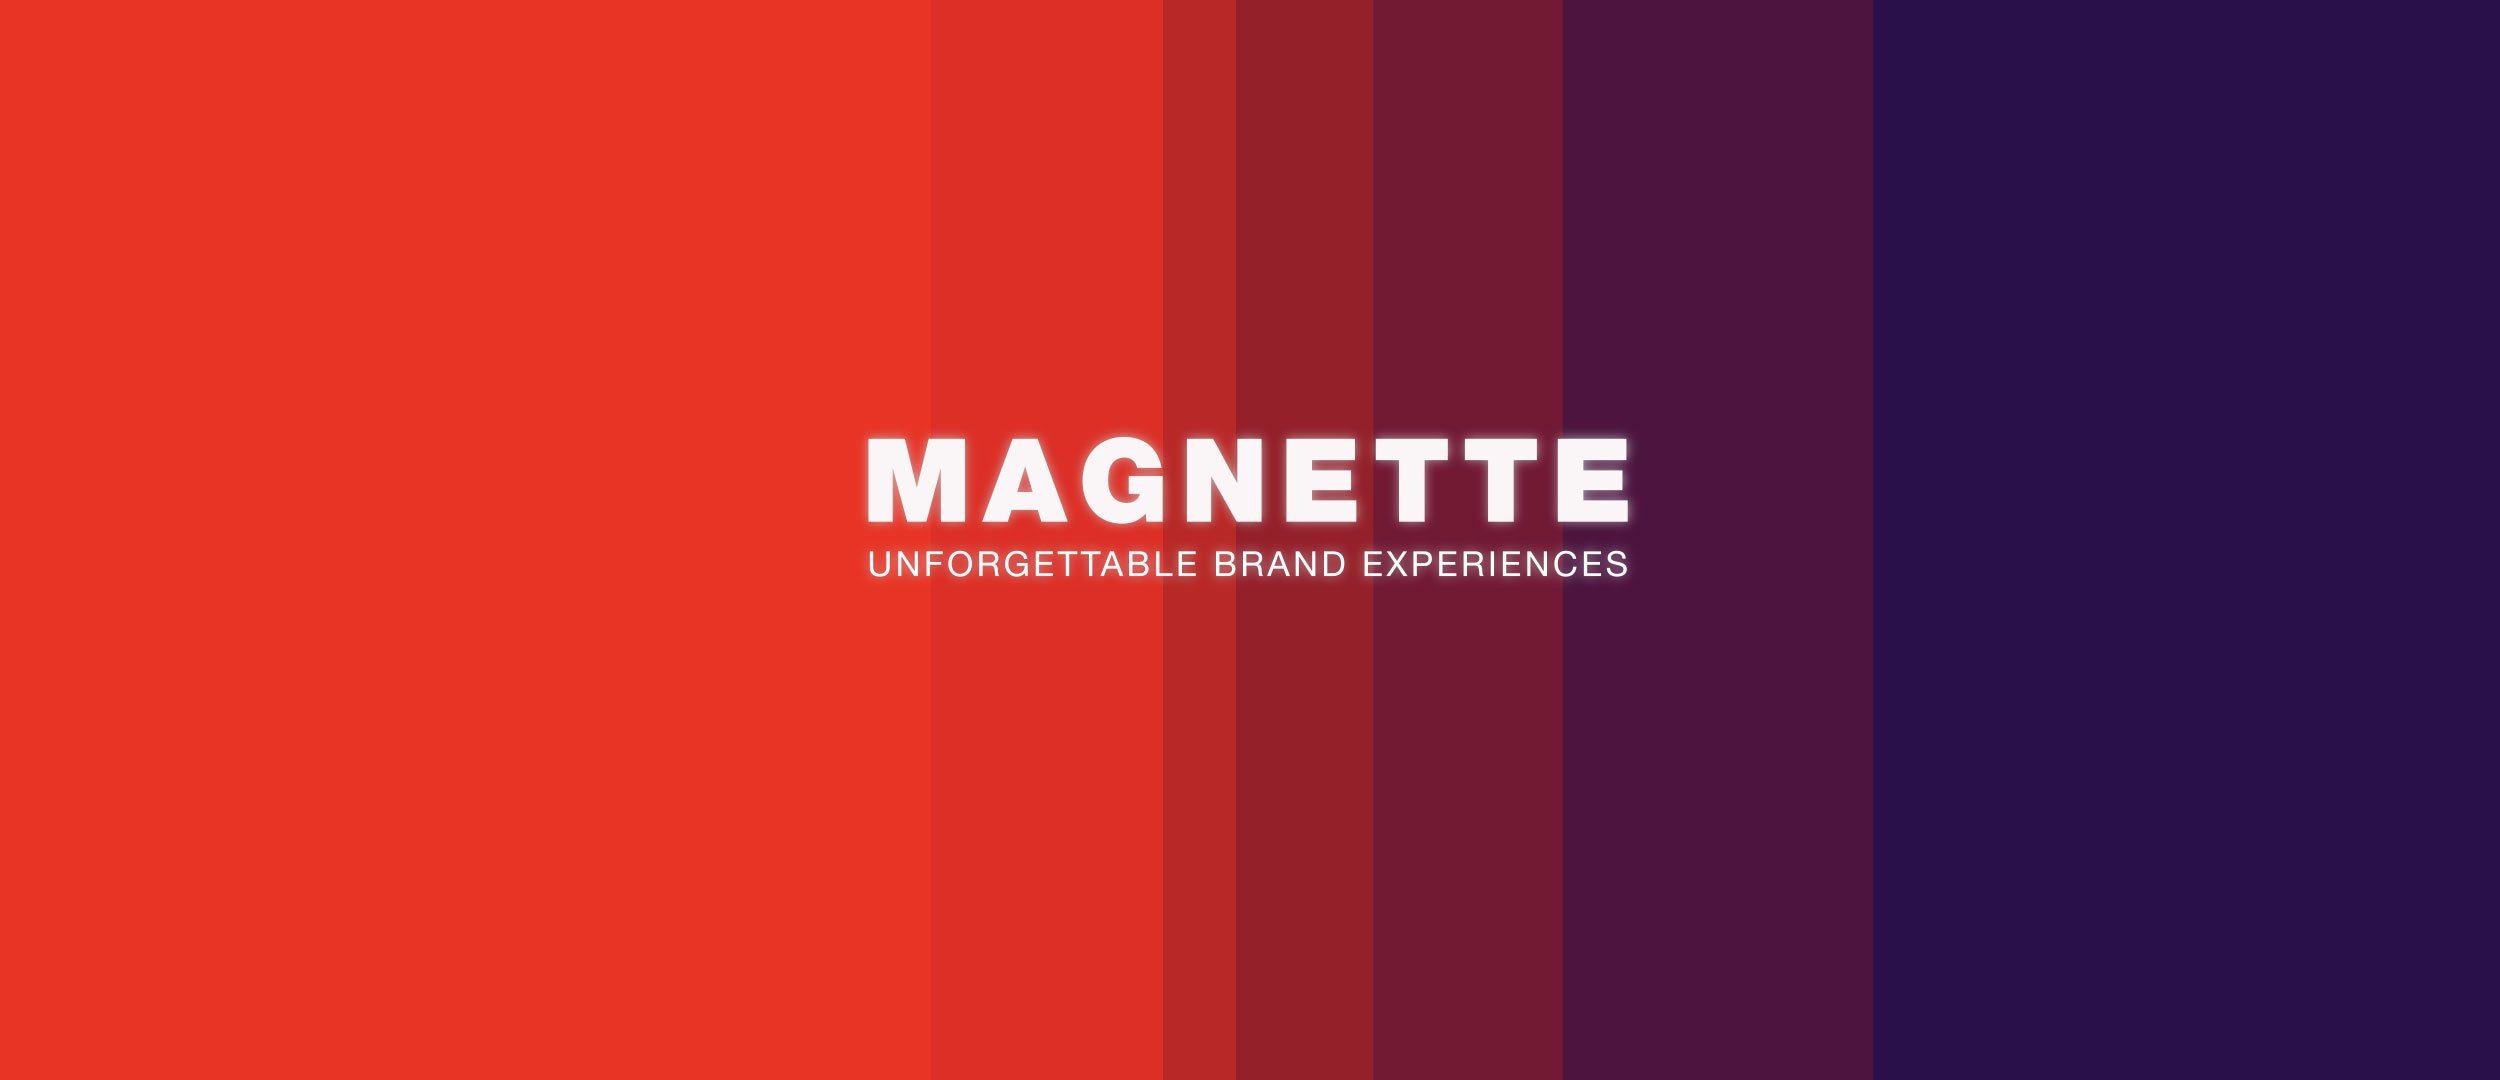 magnette-events-video.jpg